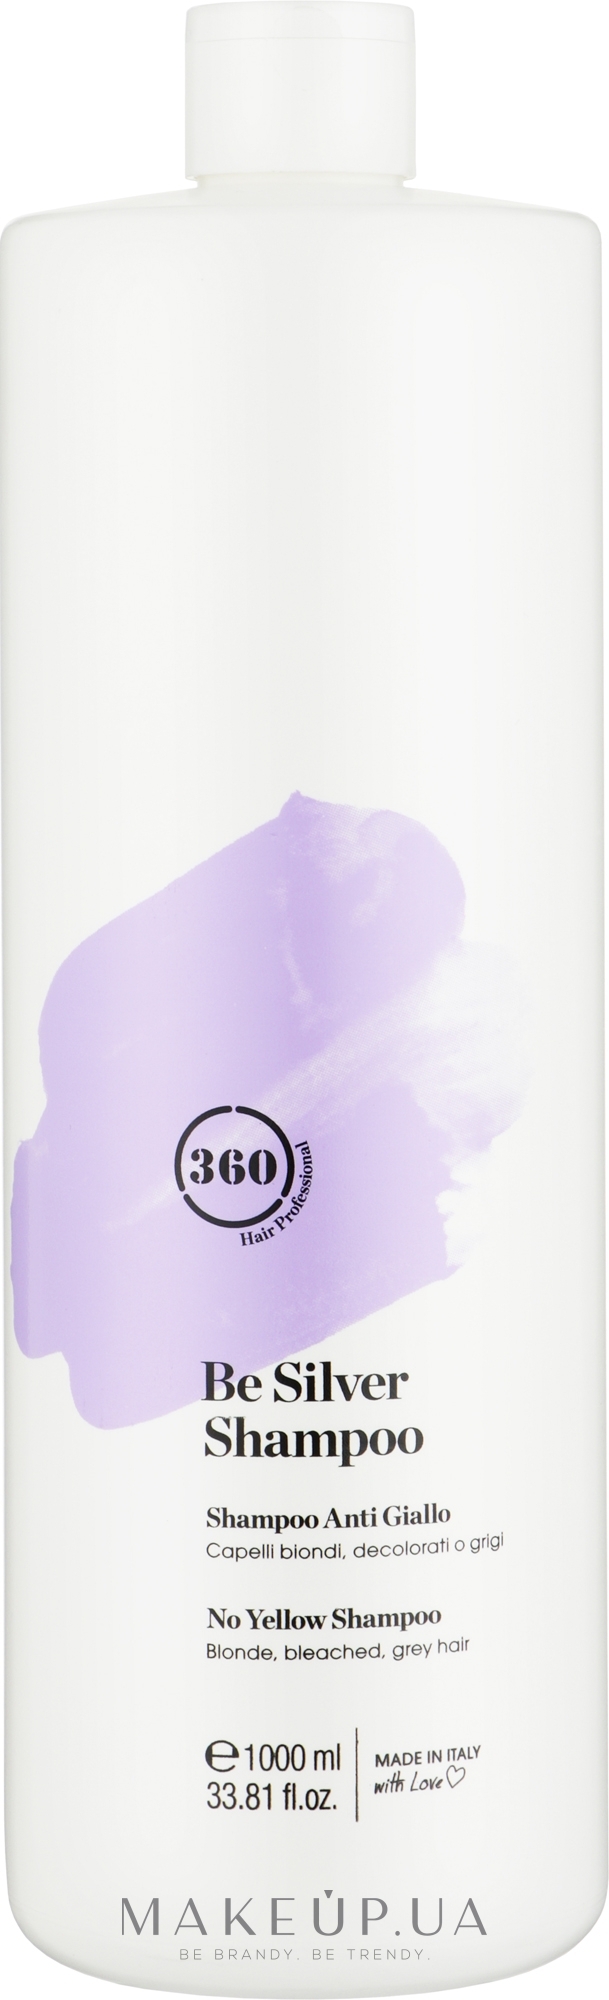 Шампунь для волос антижелтый "Серебристый блонд" - 360 Be Silver Shampoo — фото 1000ml